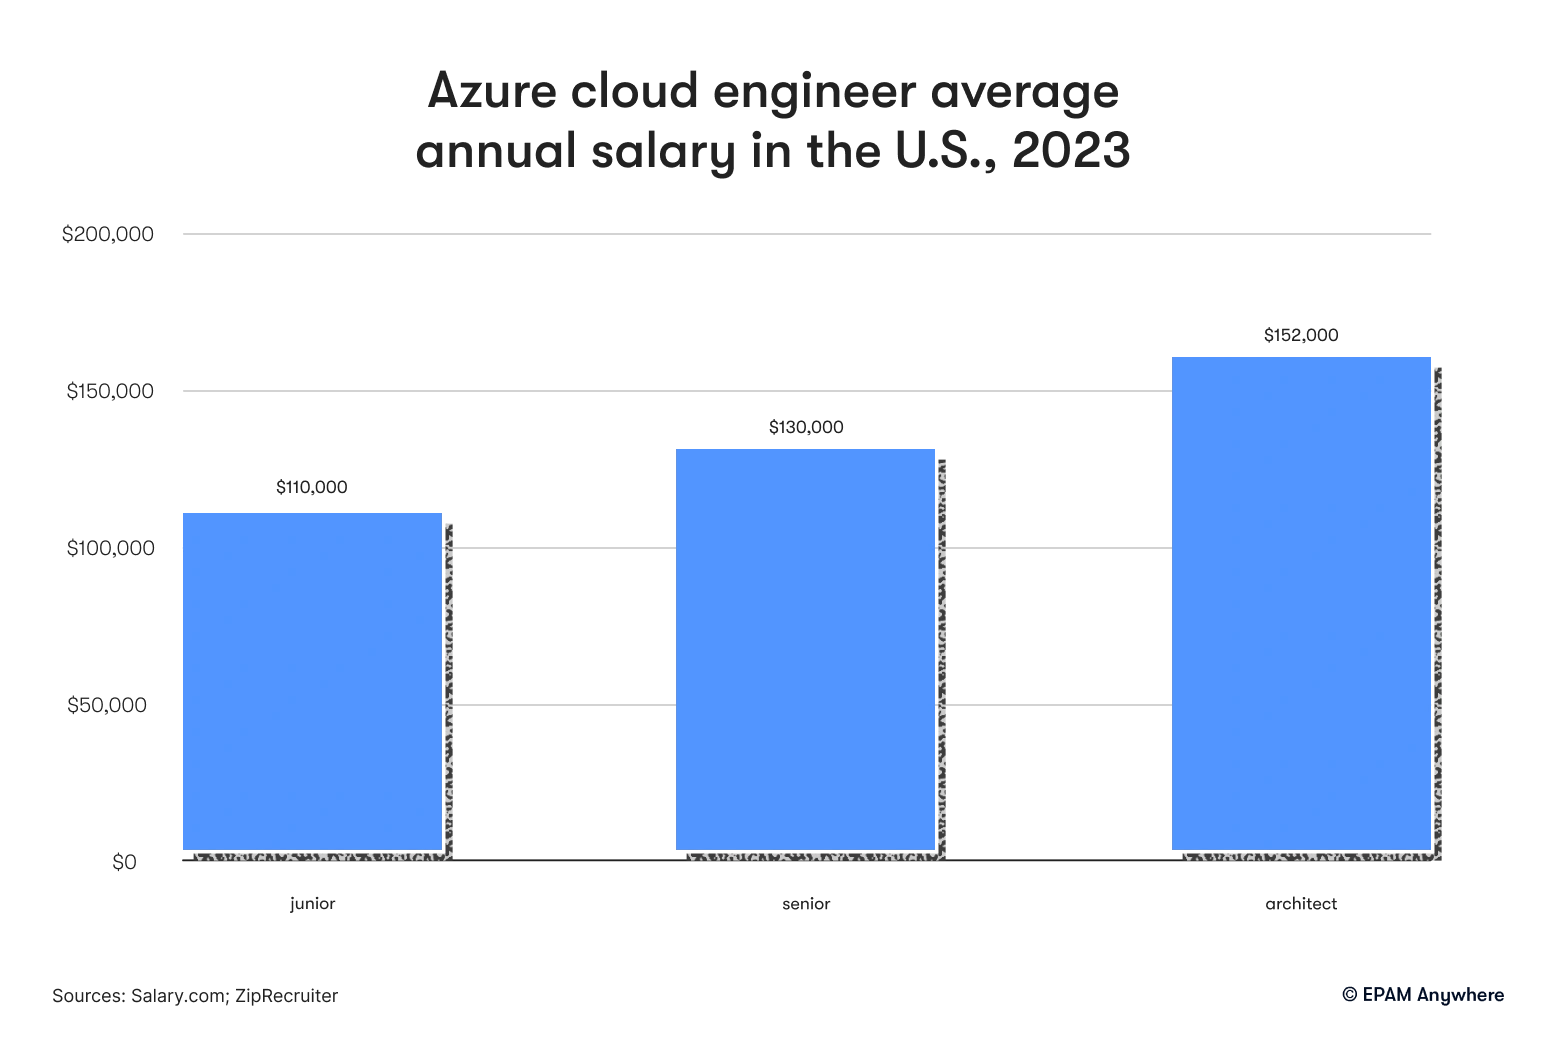 Azure cloud engineer average annual salary in the U.S., 2023